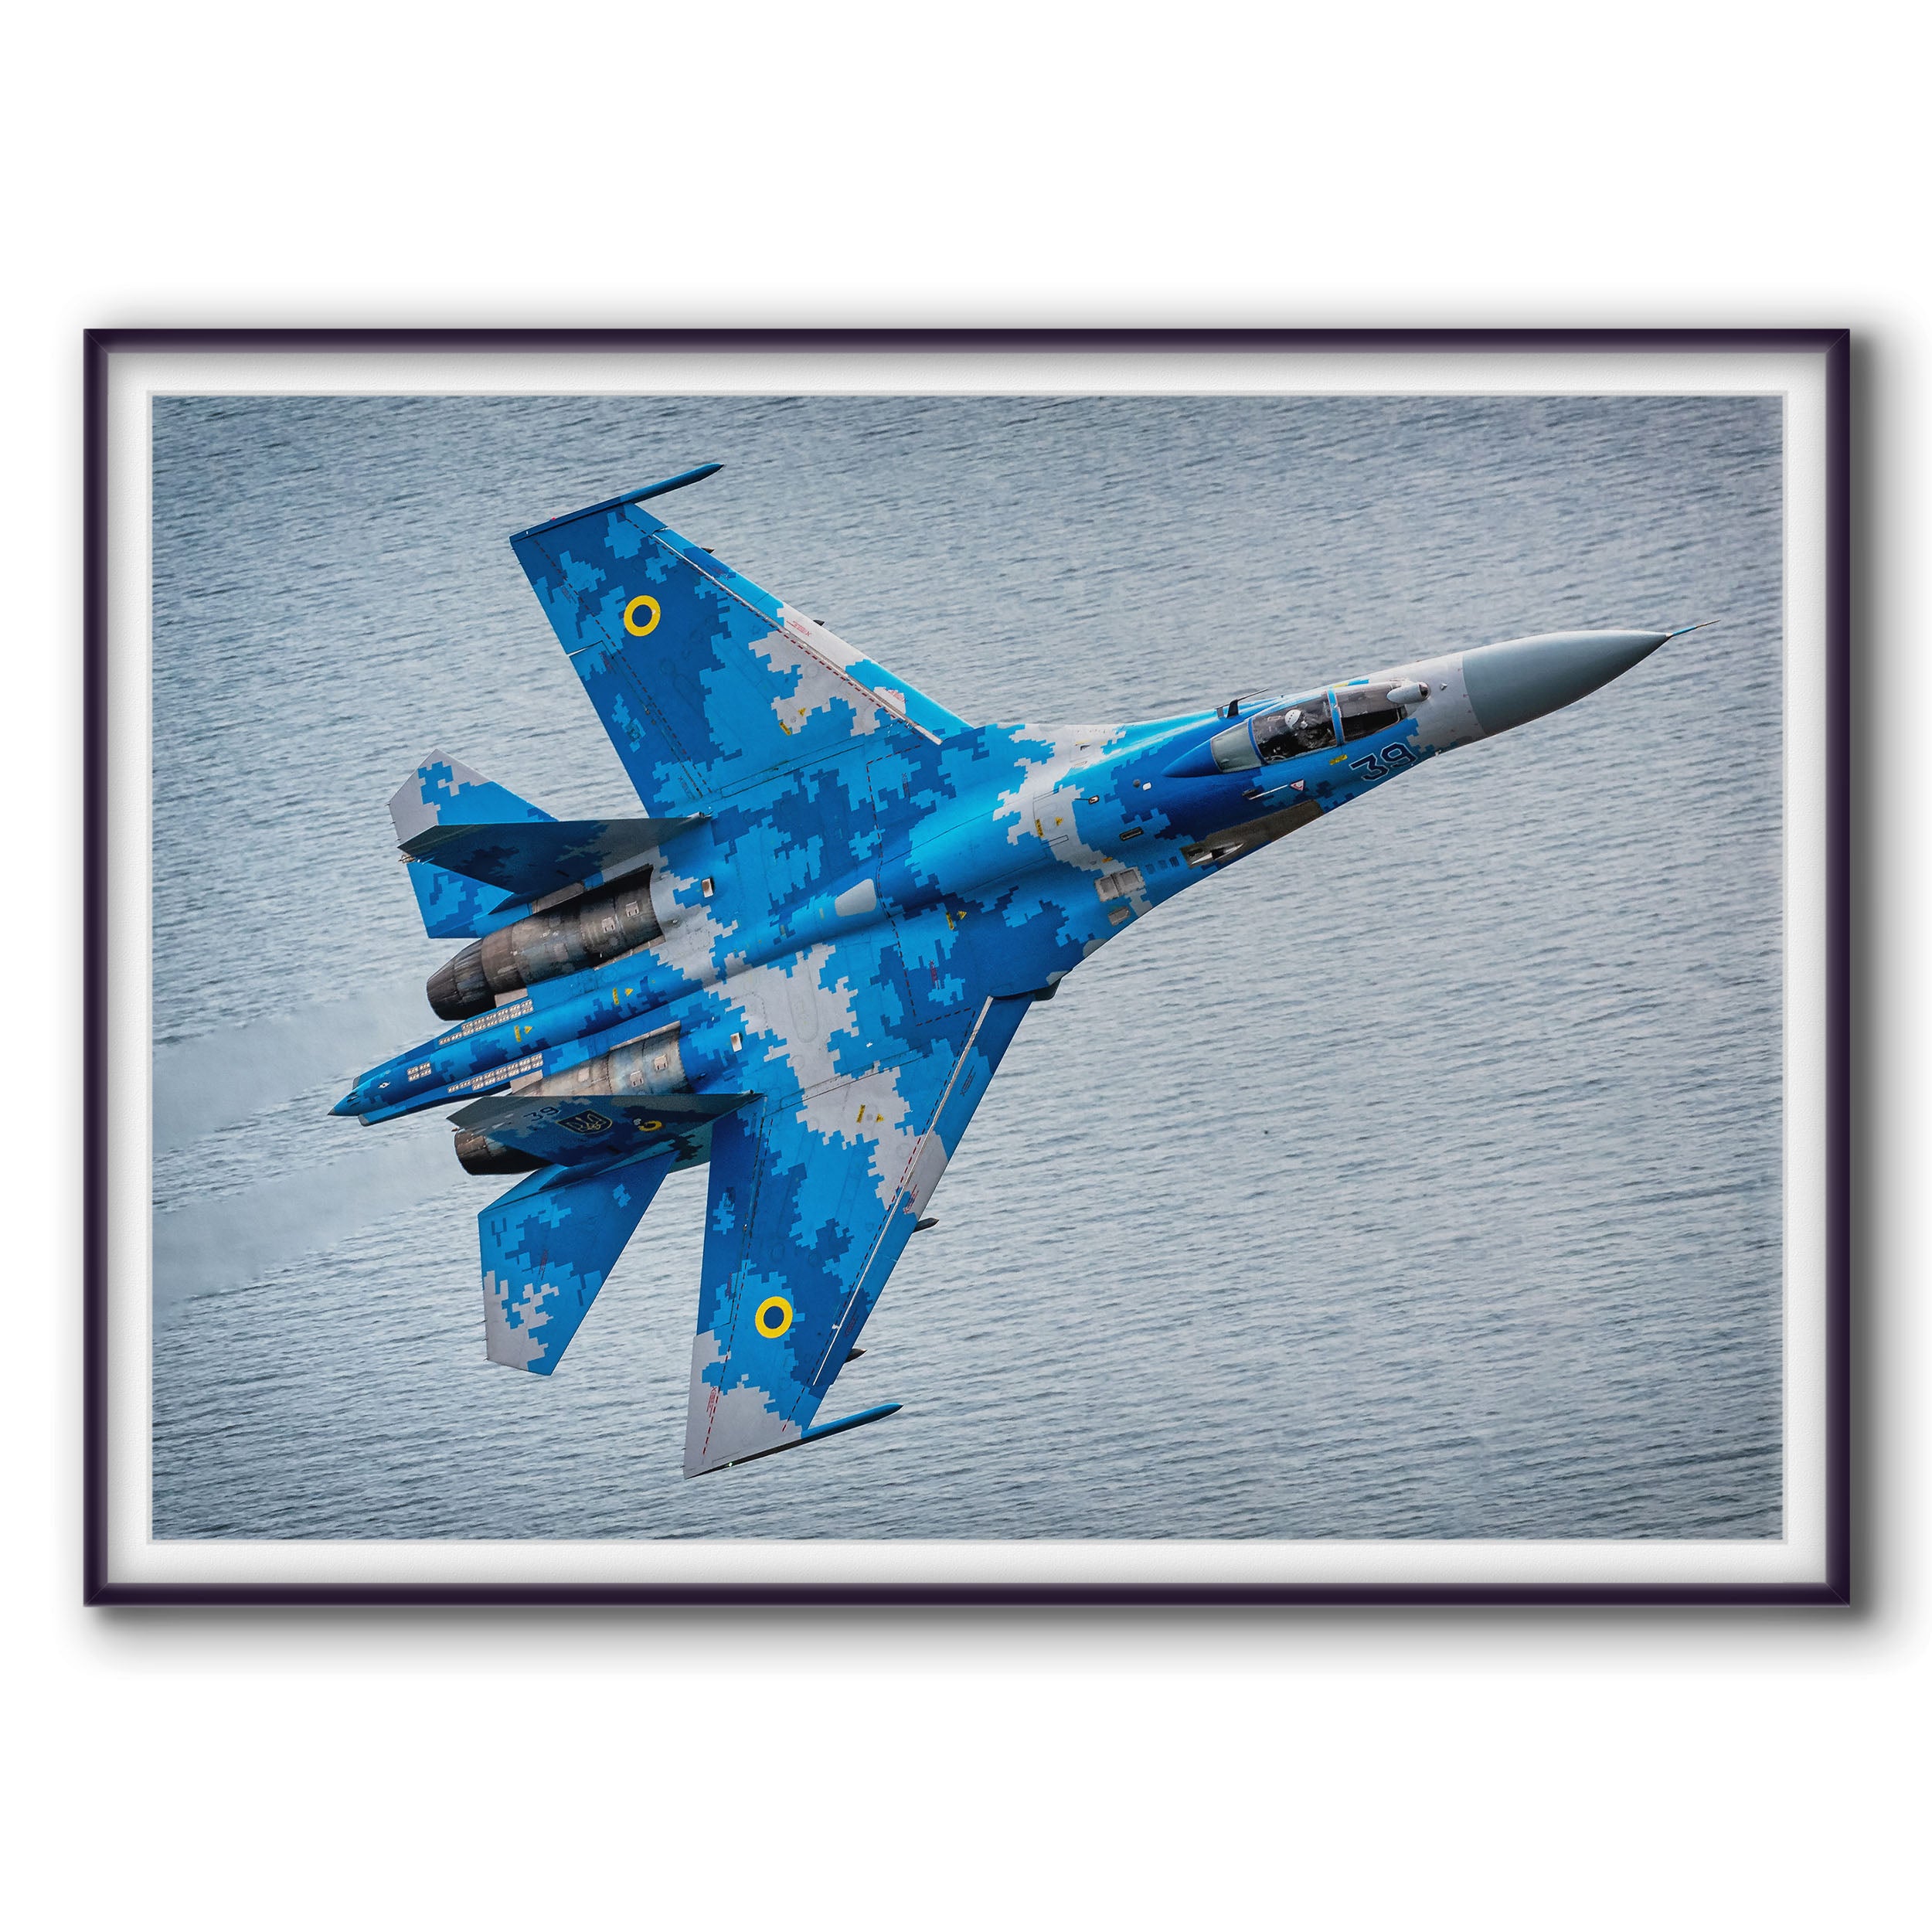 Ukrainian Su-27